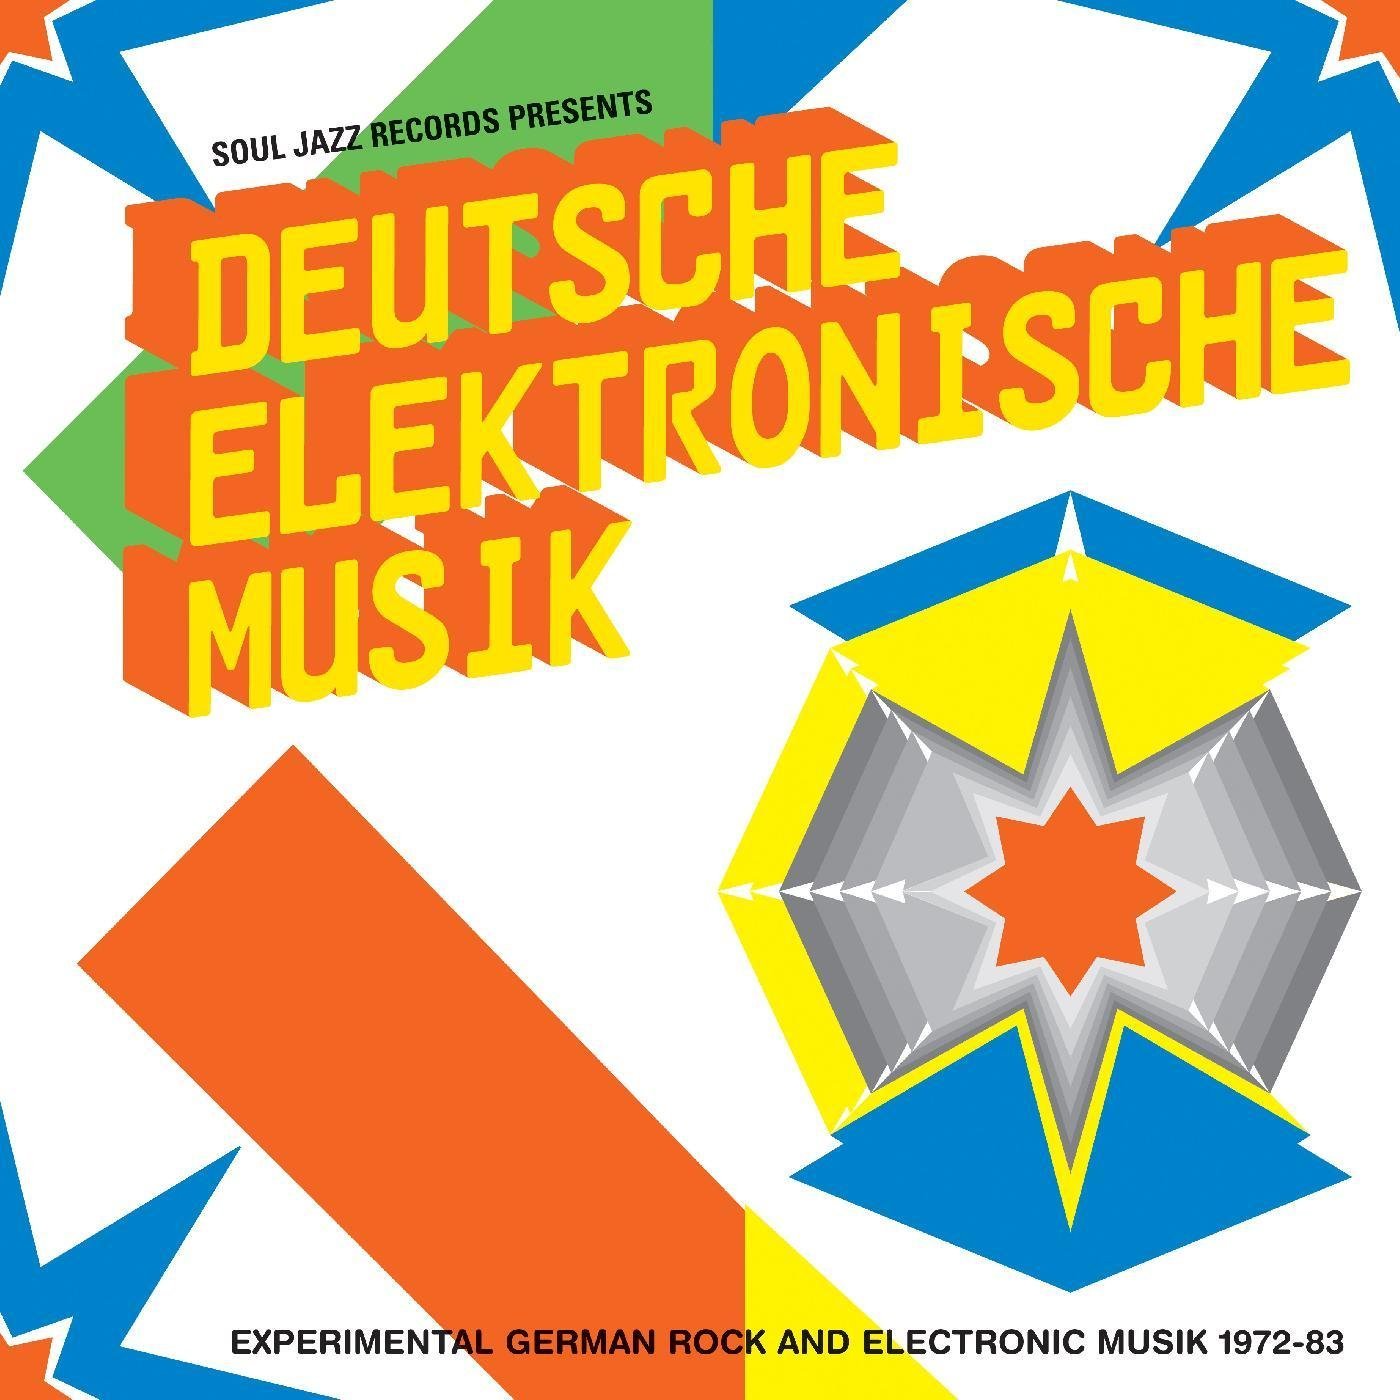 V.A. / DEUTSCHE ELEKTRONISCHE MUSIK:EXPERIMENTAL GERMAN ROCK AND ELECTRONIC MUSIC 1972-83 VOL.1 (2LP)